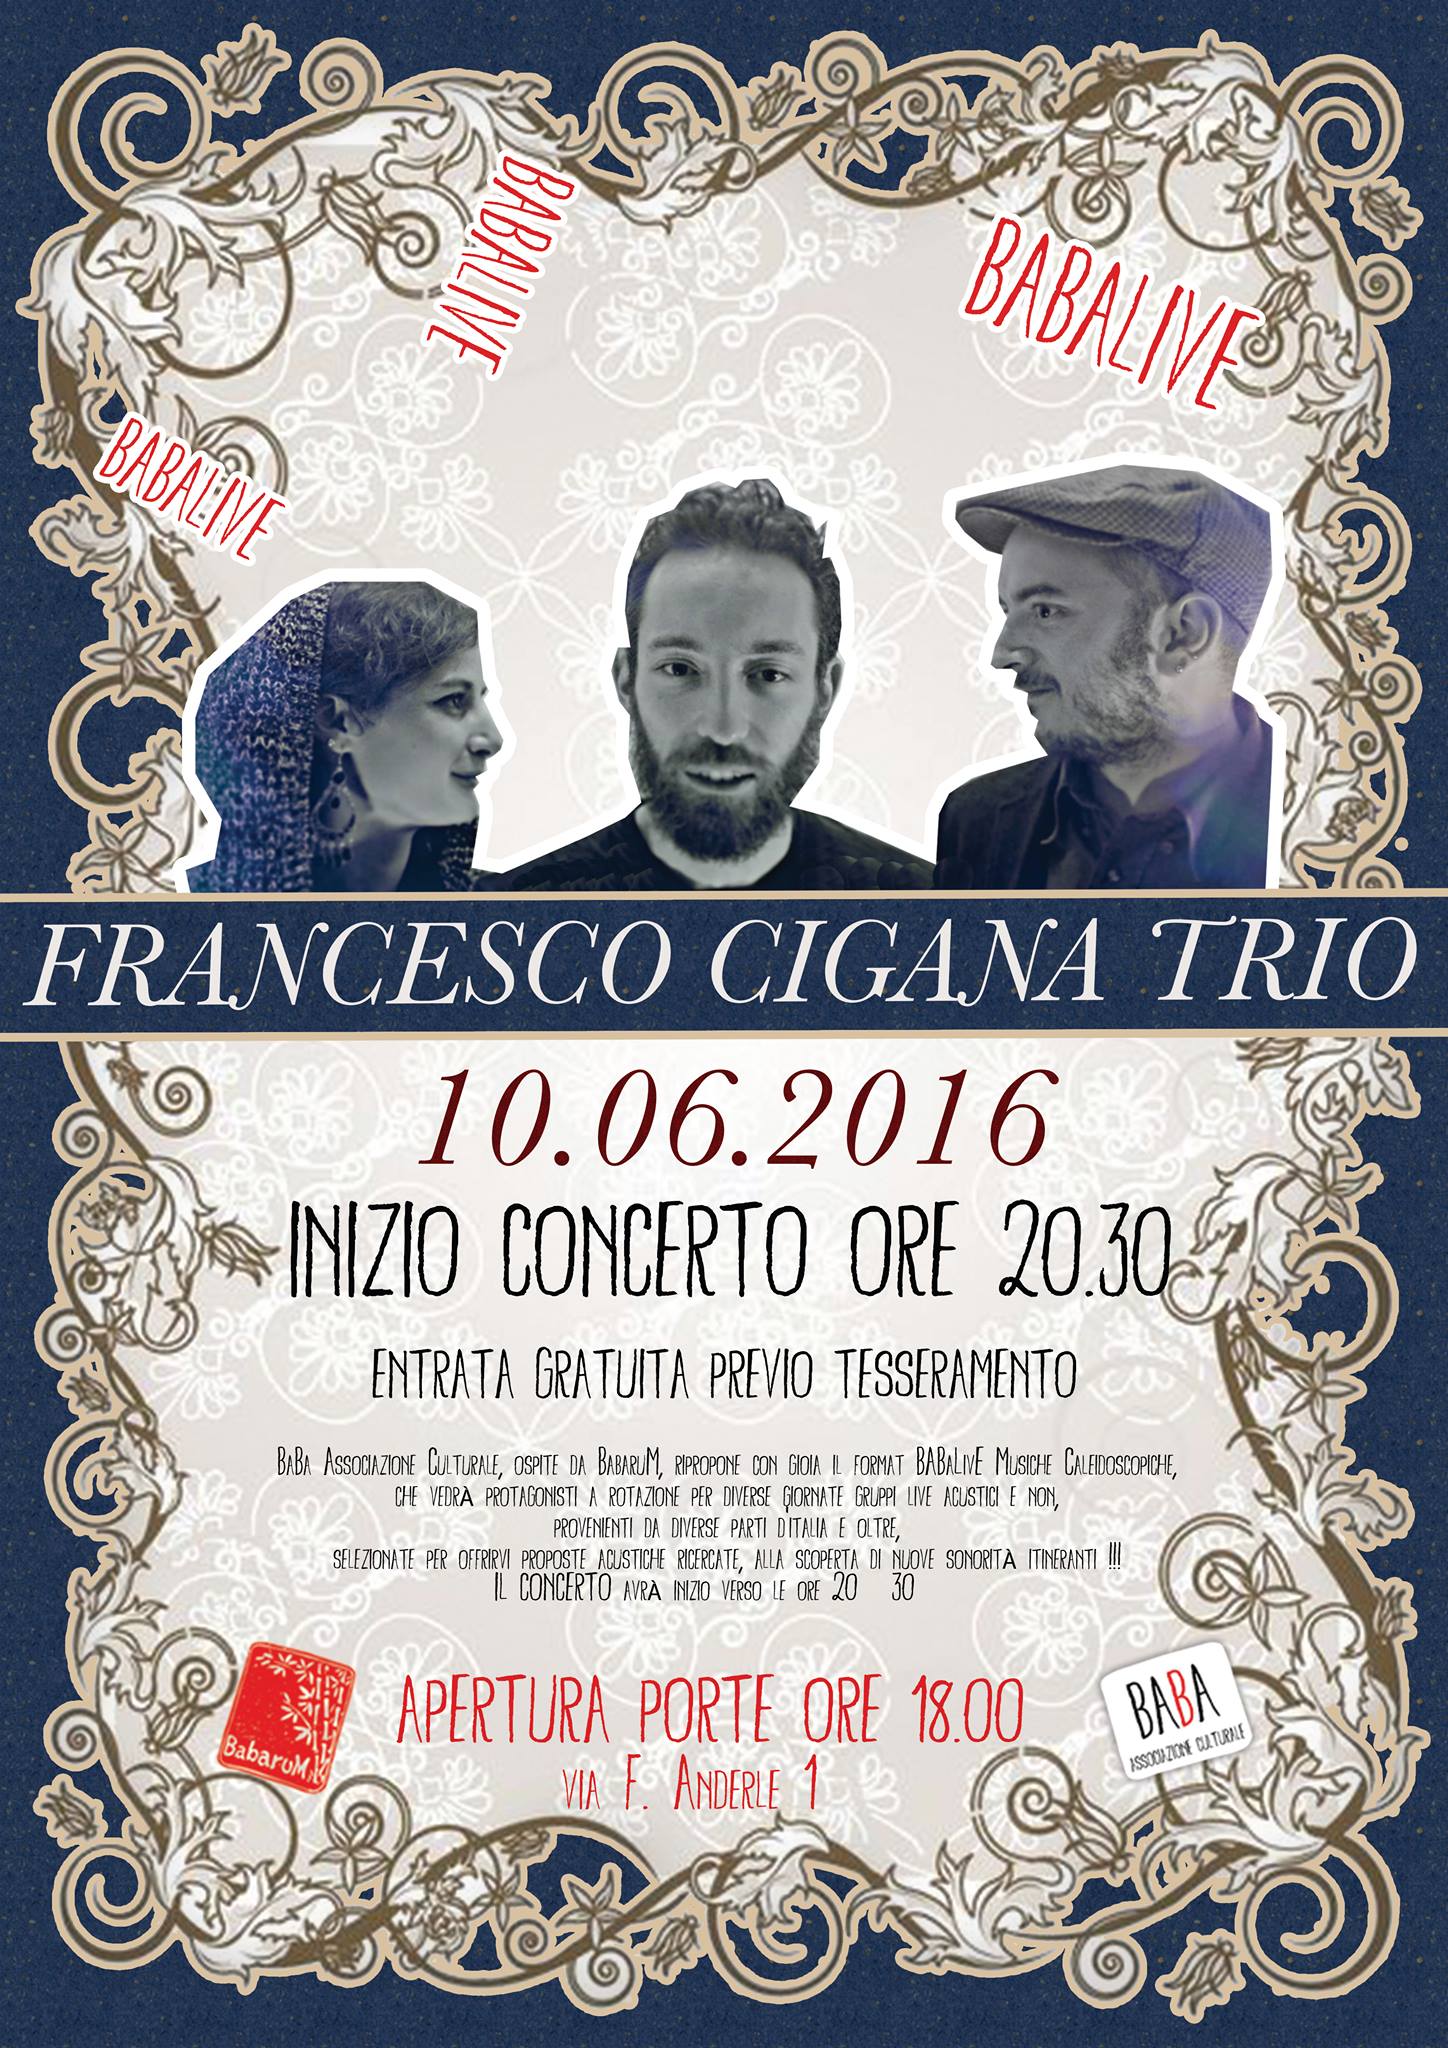 BABaLivE ( Francesco Cigana Trio ) – Arti Caleidoscopiche